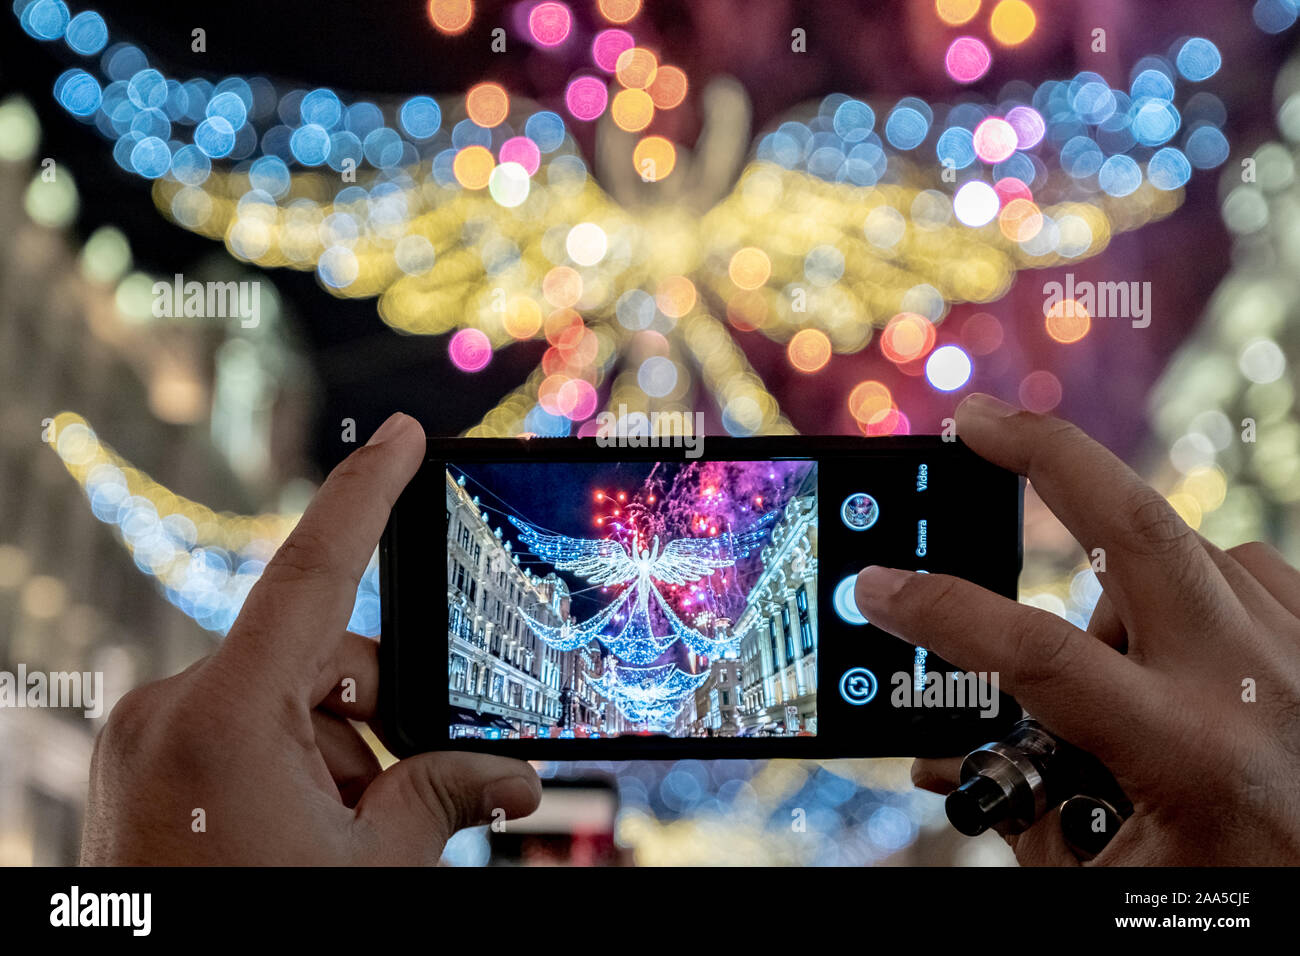 London, UK. 14th Nov 2019. Regent Street Christmas Lights switch-on with fireworks display. Credit: Guy Corbishley/Alamy Live News Stock Photo